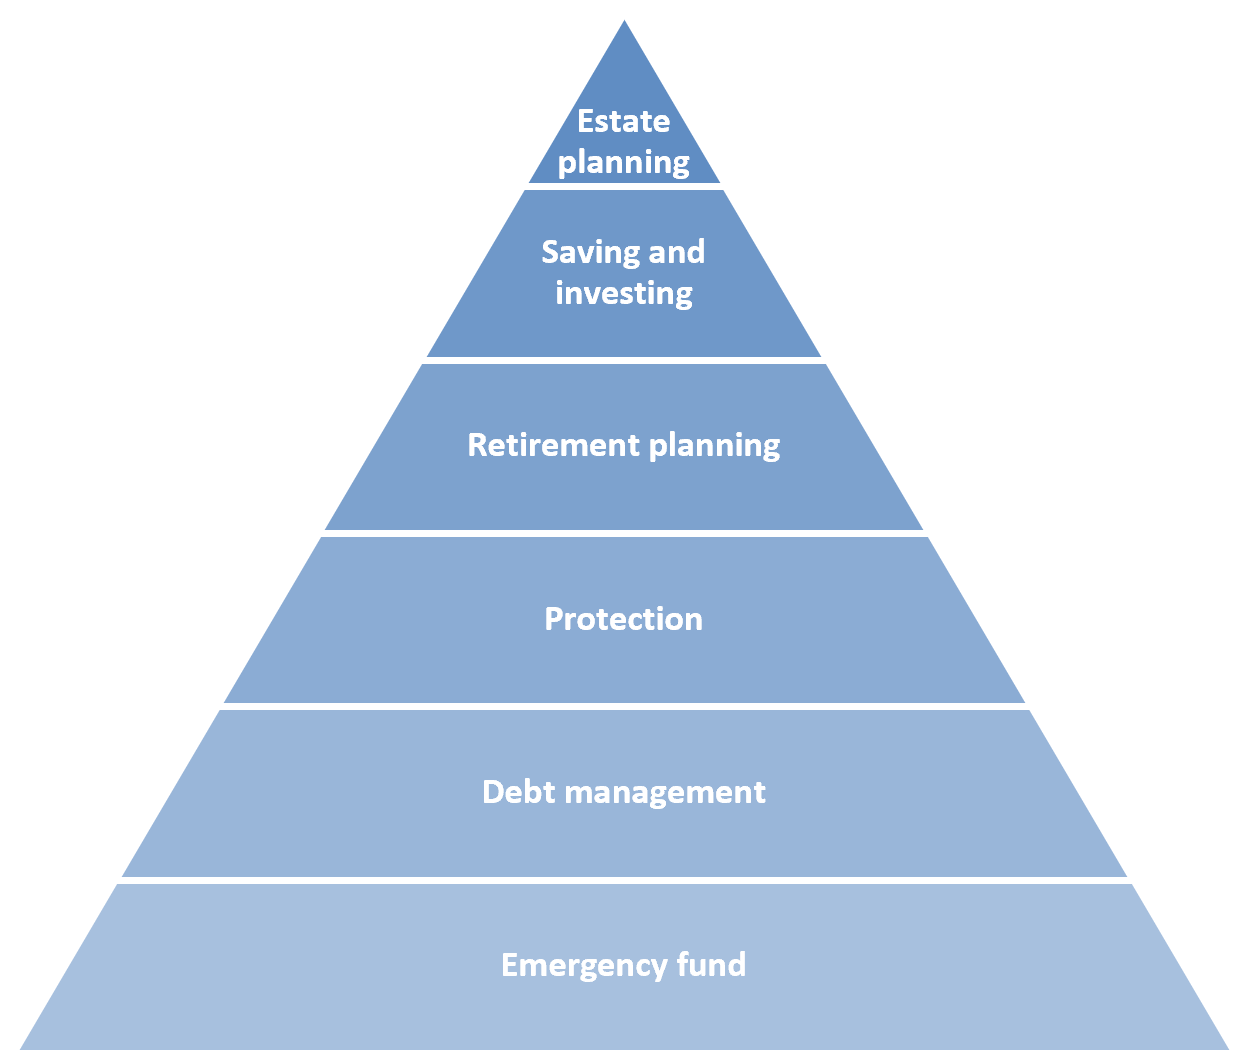 Aurelija Buckute: Four characteristics of a good financial plan